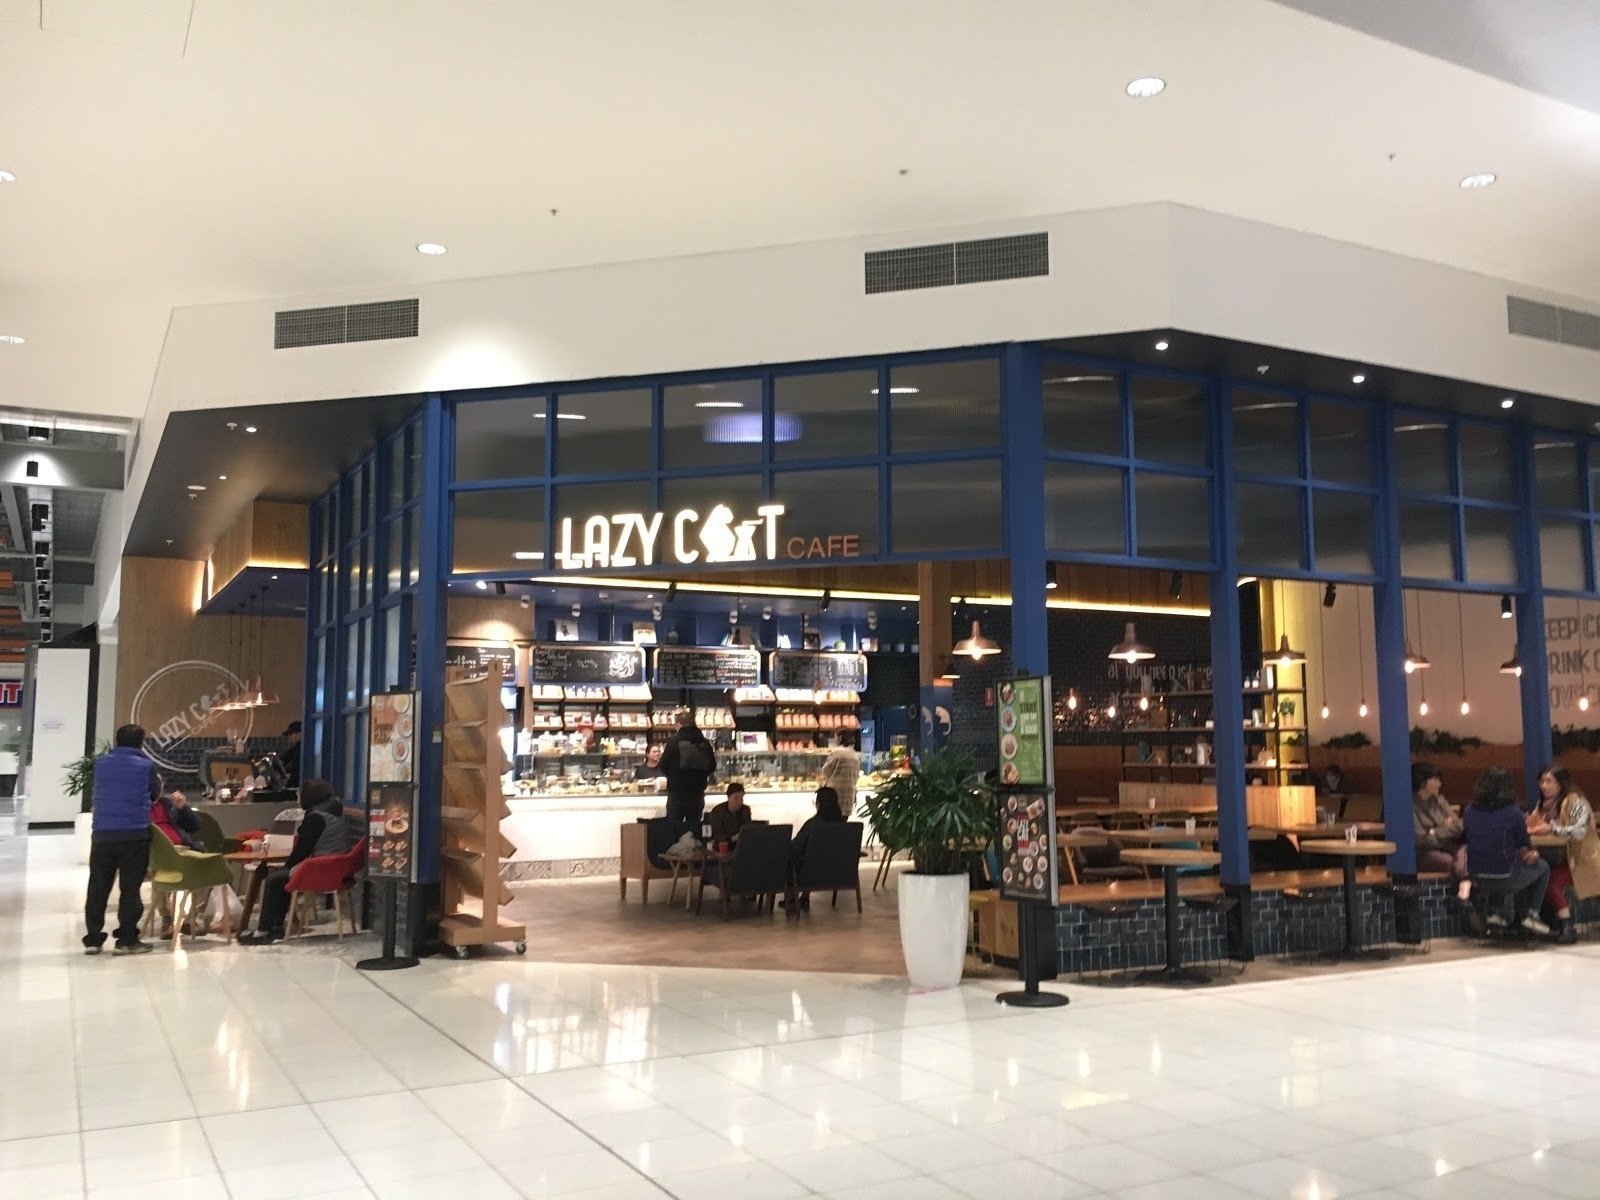 <span class="translation_missing" title="translation missing: en.meta.location_title, location_name: Lazy Cat Cafe, city: Sydney">Location Title</span>